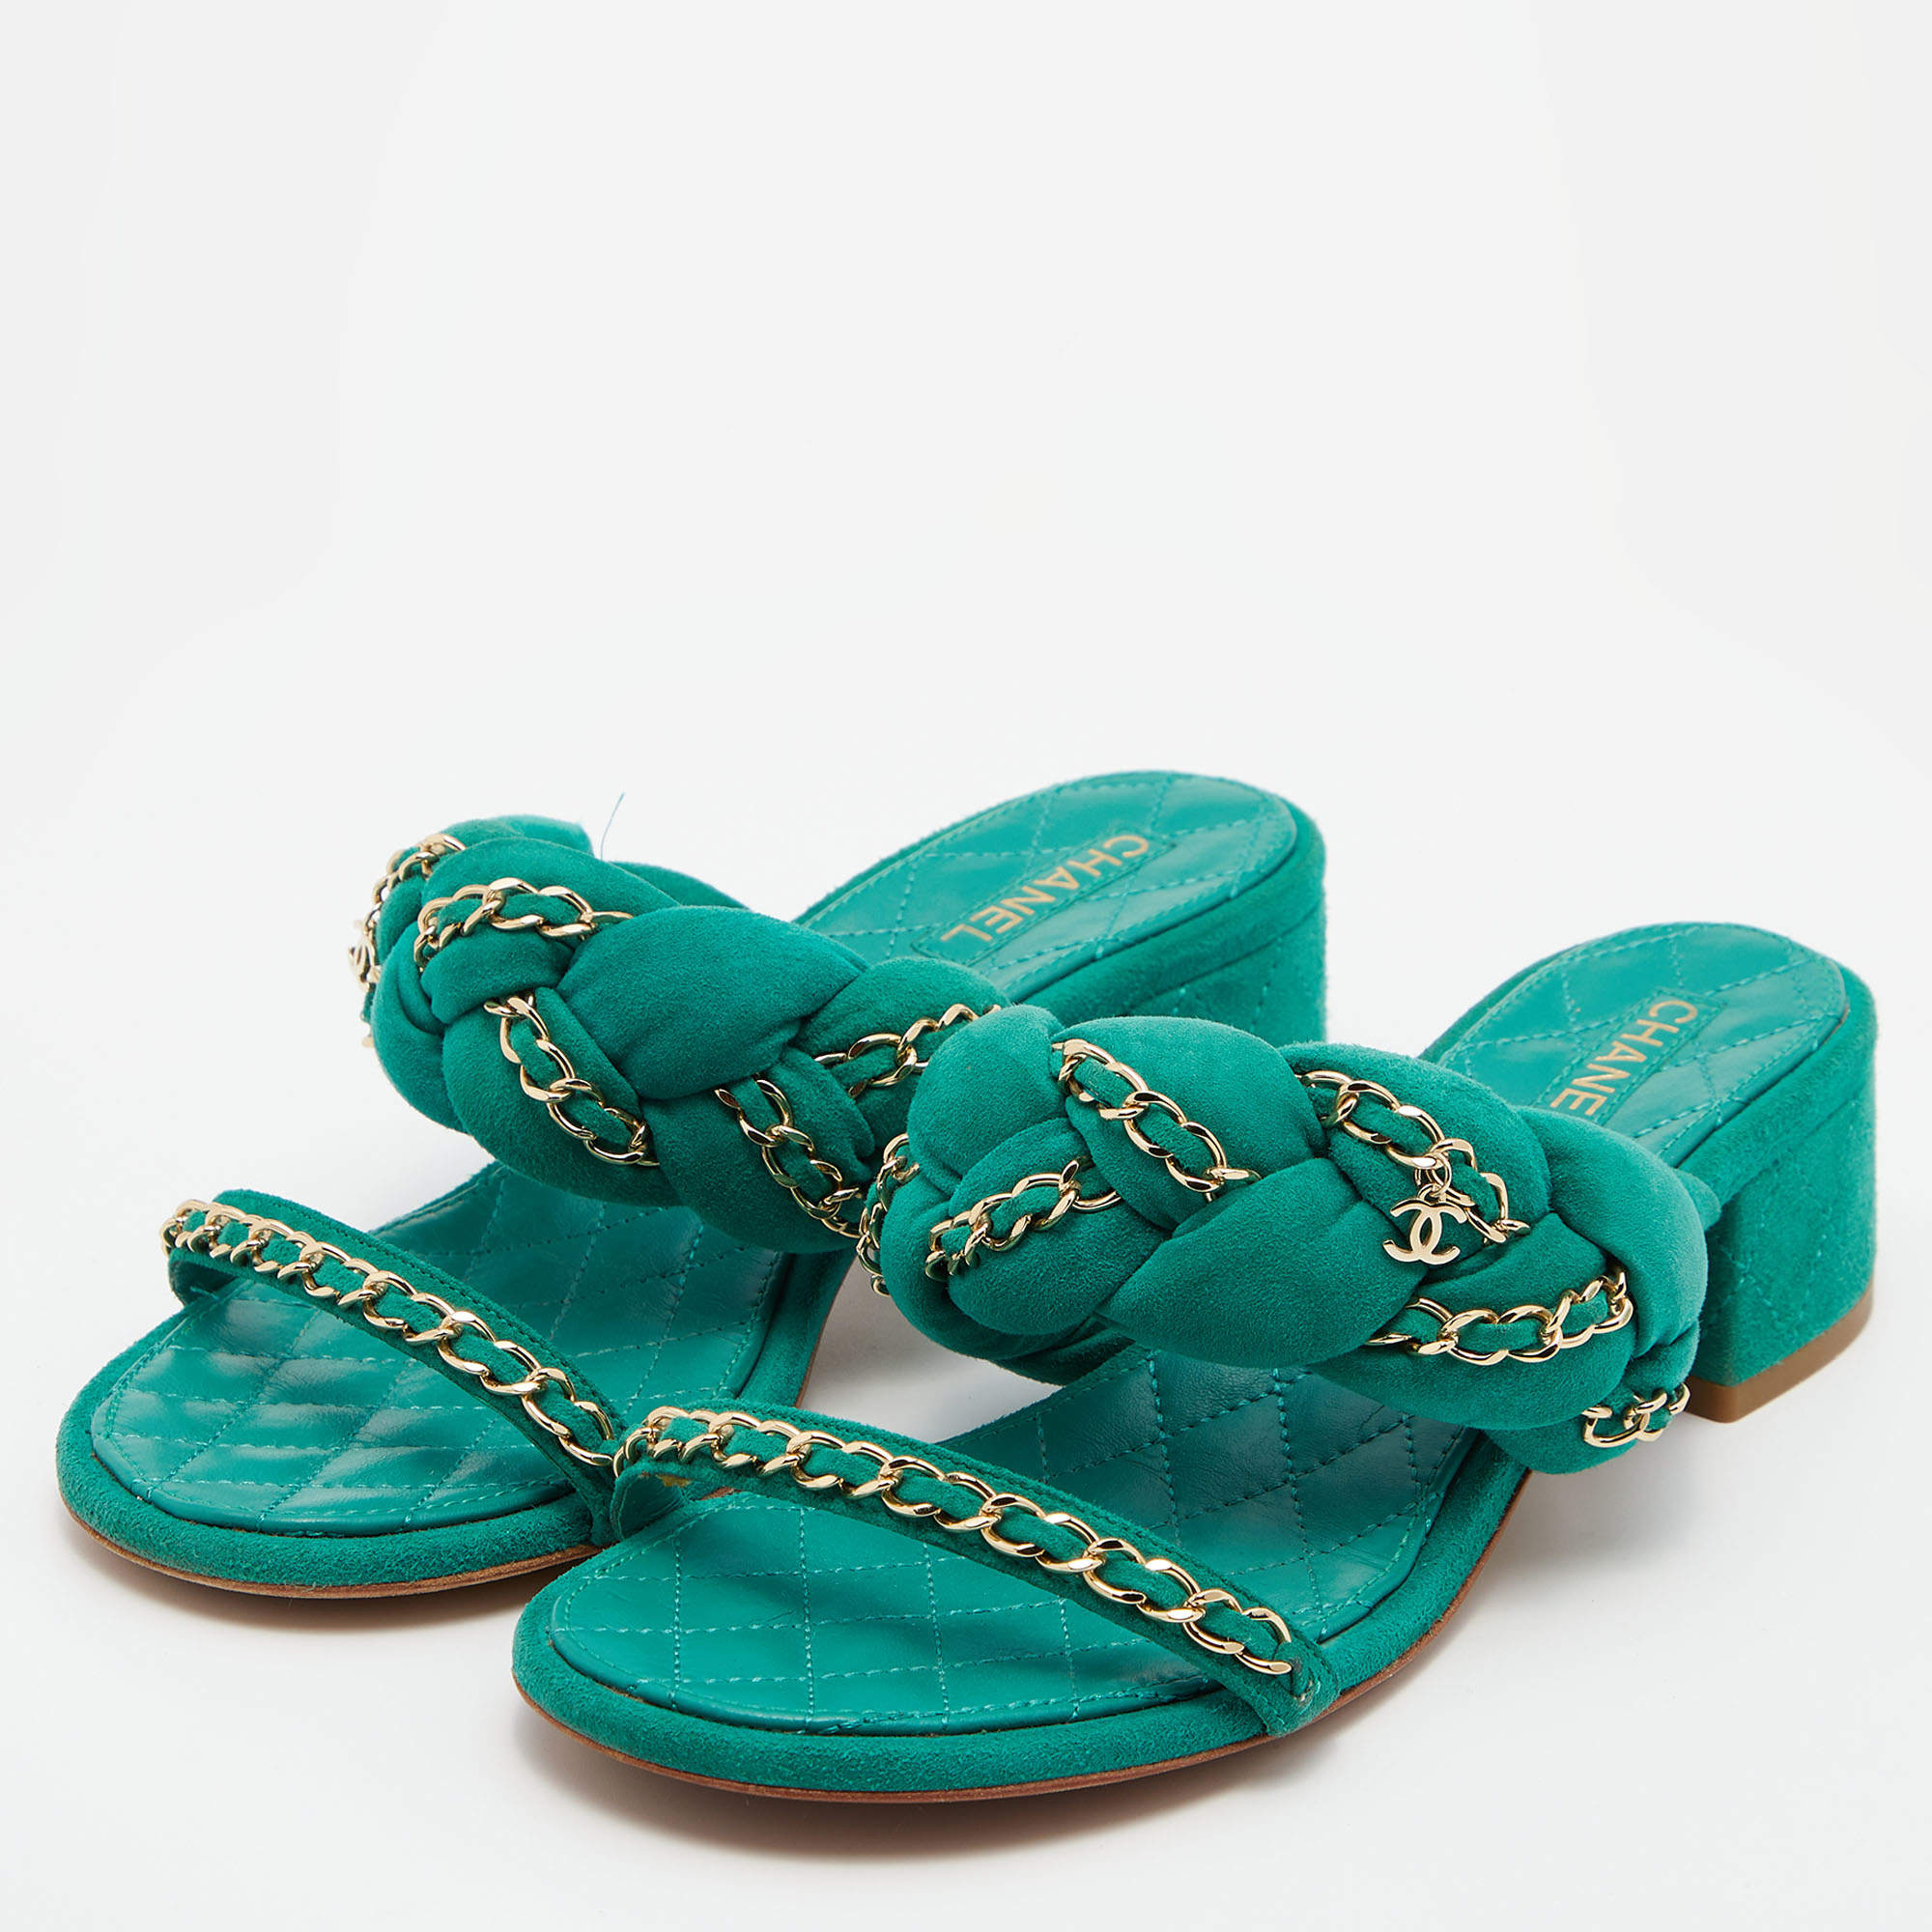 Chanel Slide Sandals Green and White Size 38 New in Box GA003  Julia  Rose Boston  Shop